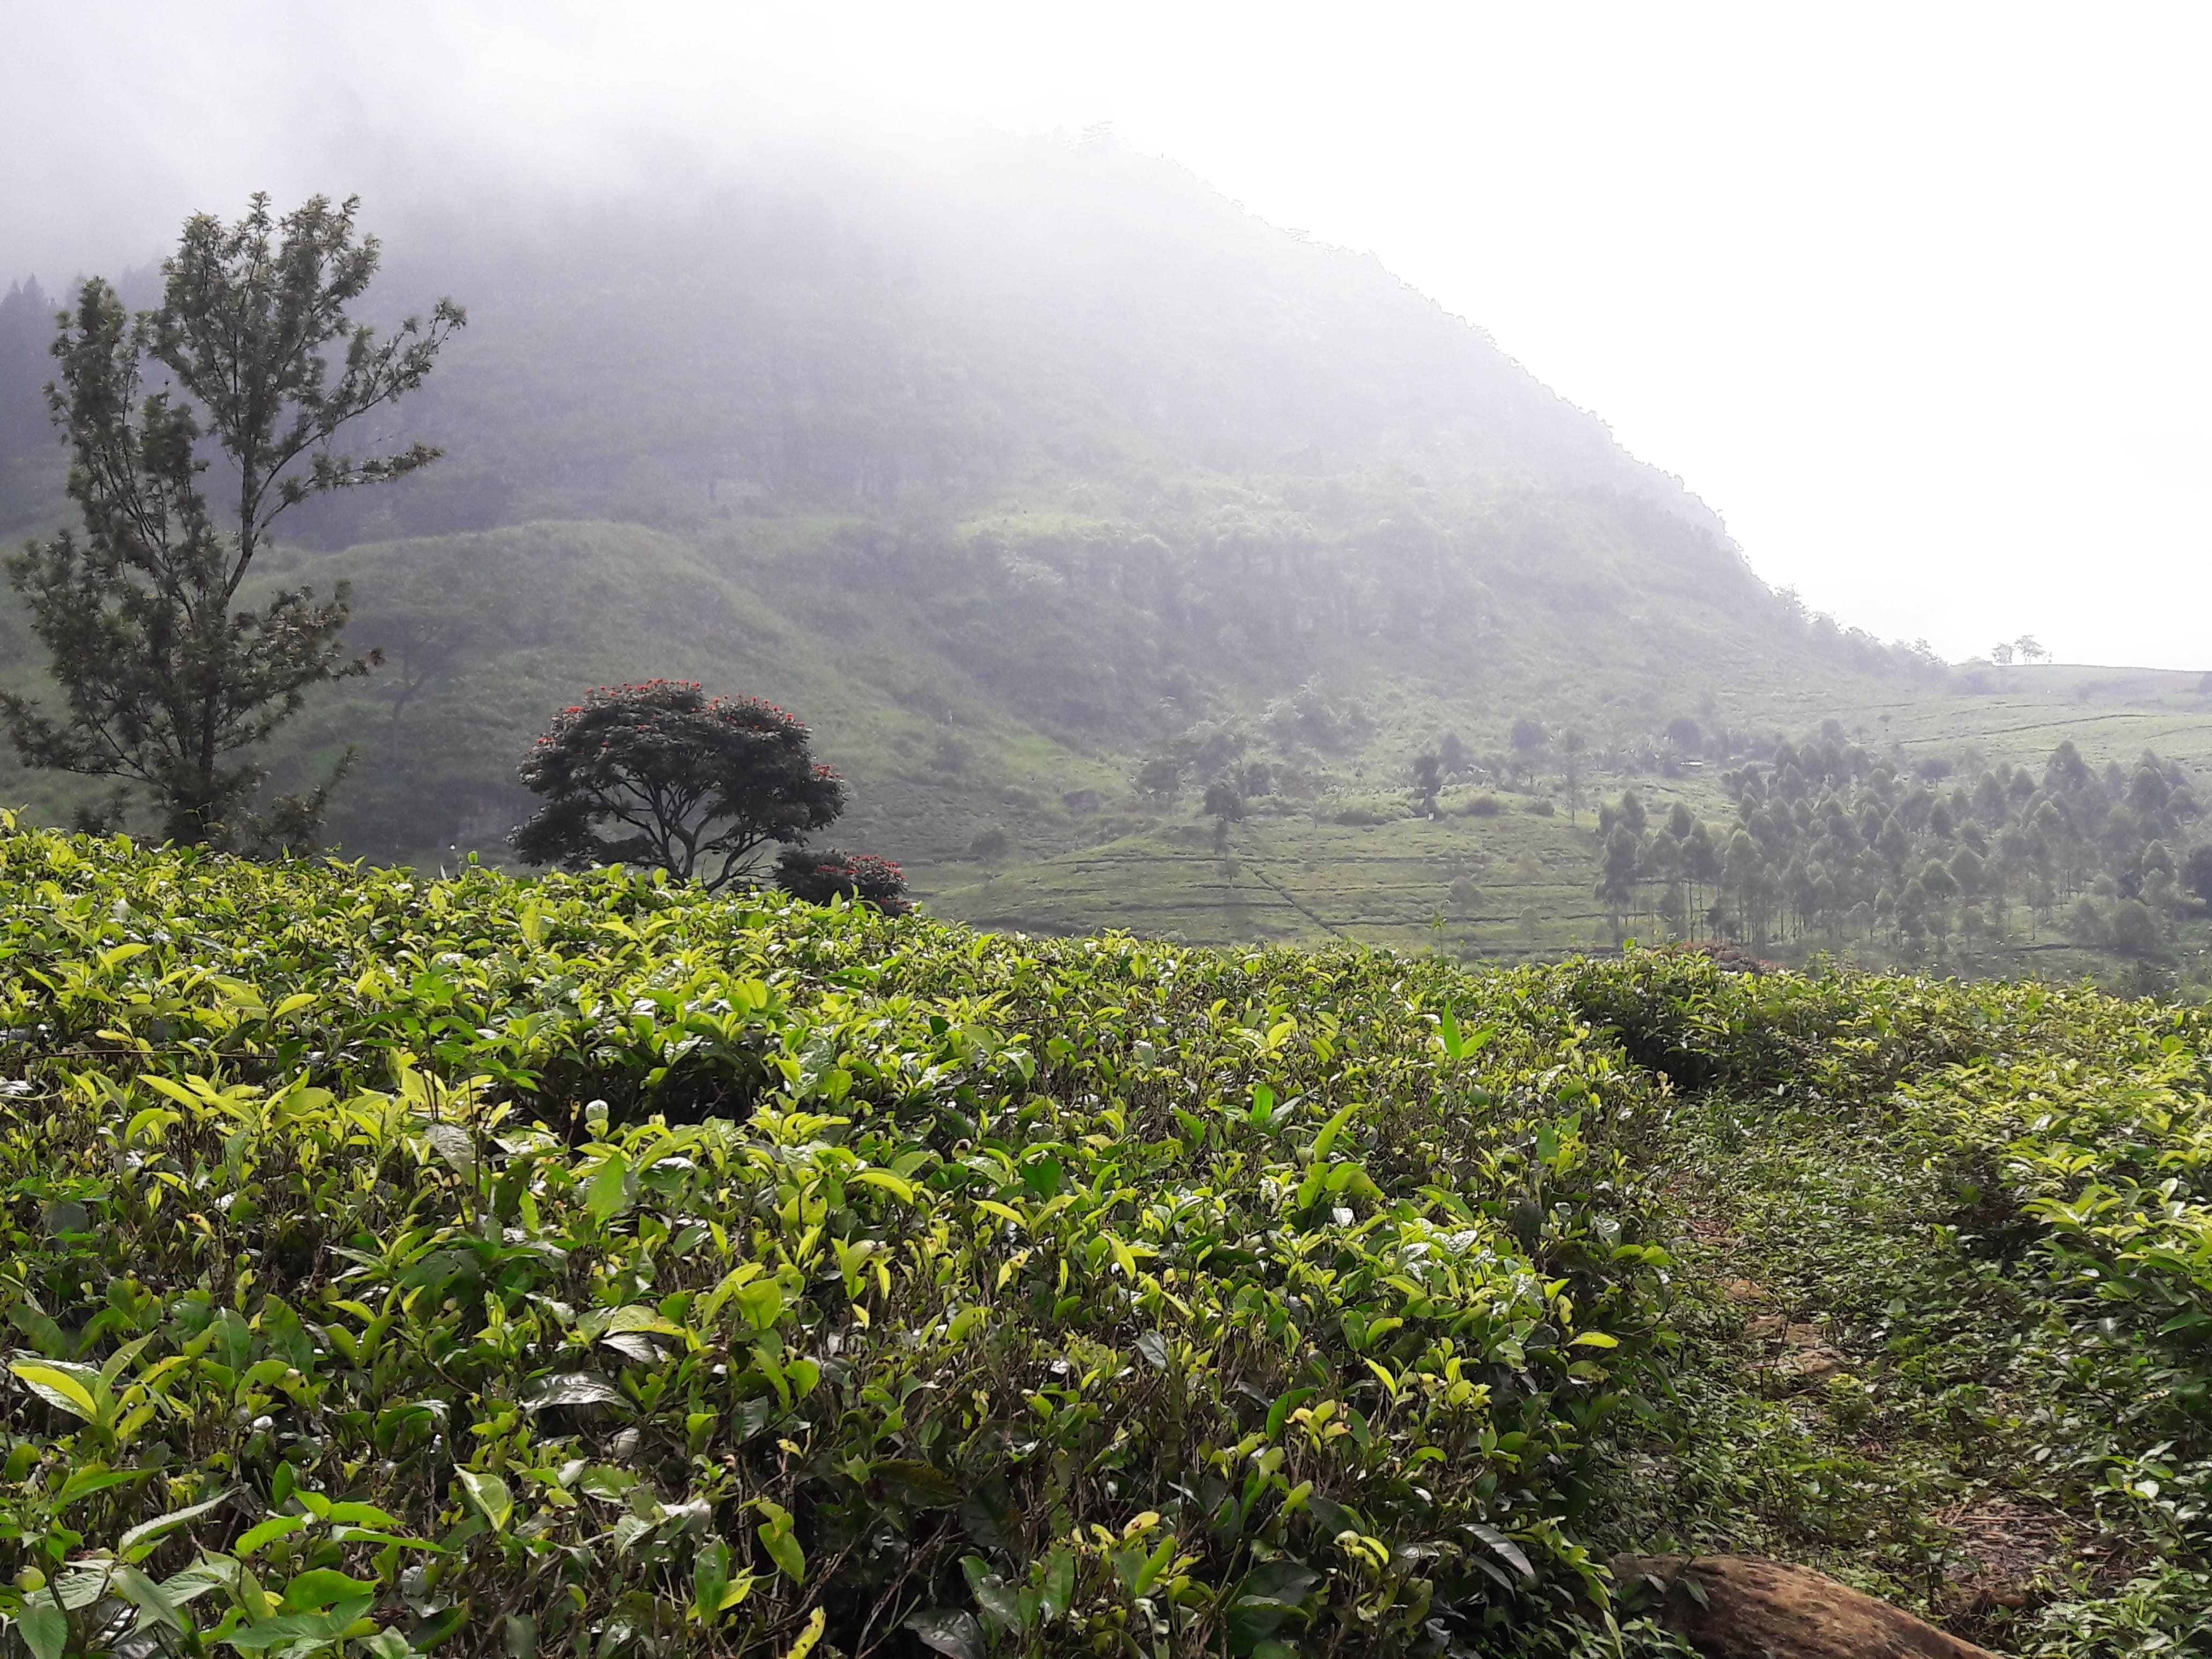 The lush green exquisite tea plantation near Nuwara Eliya